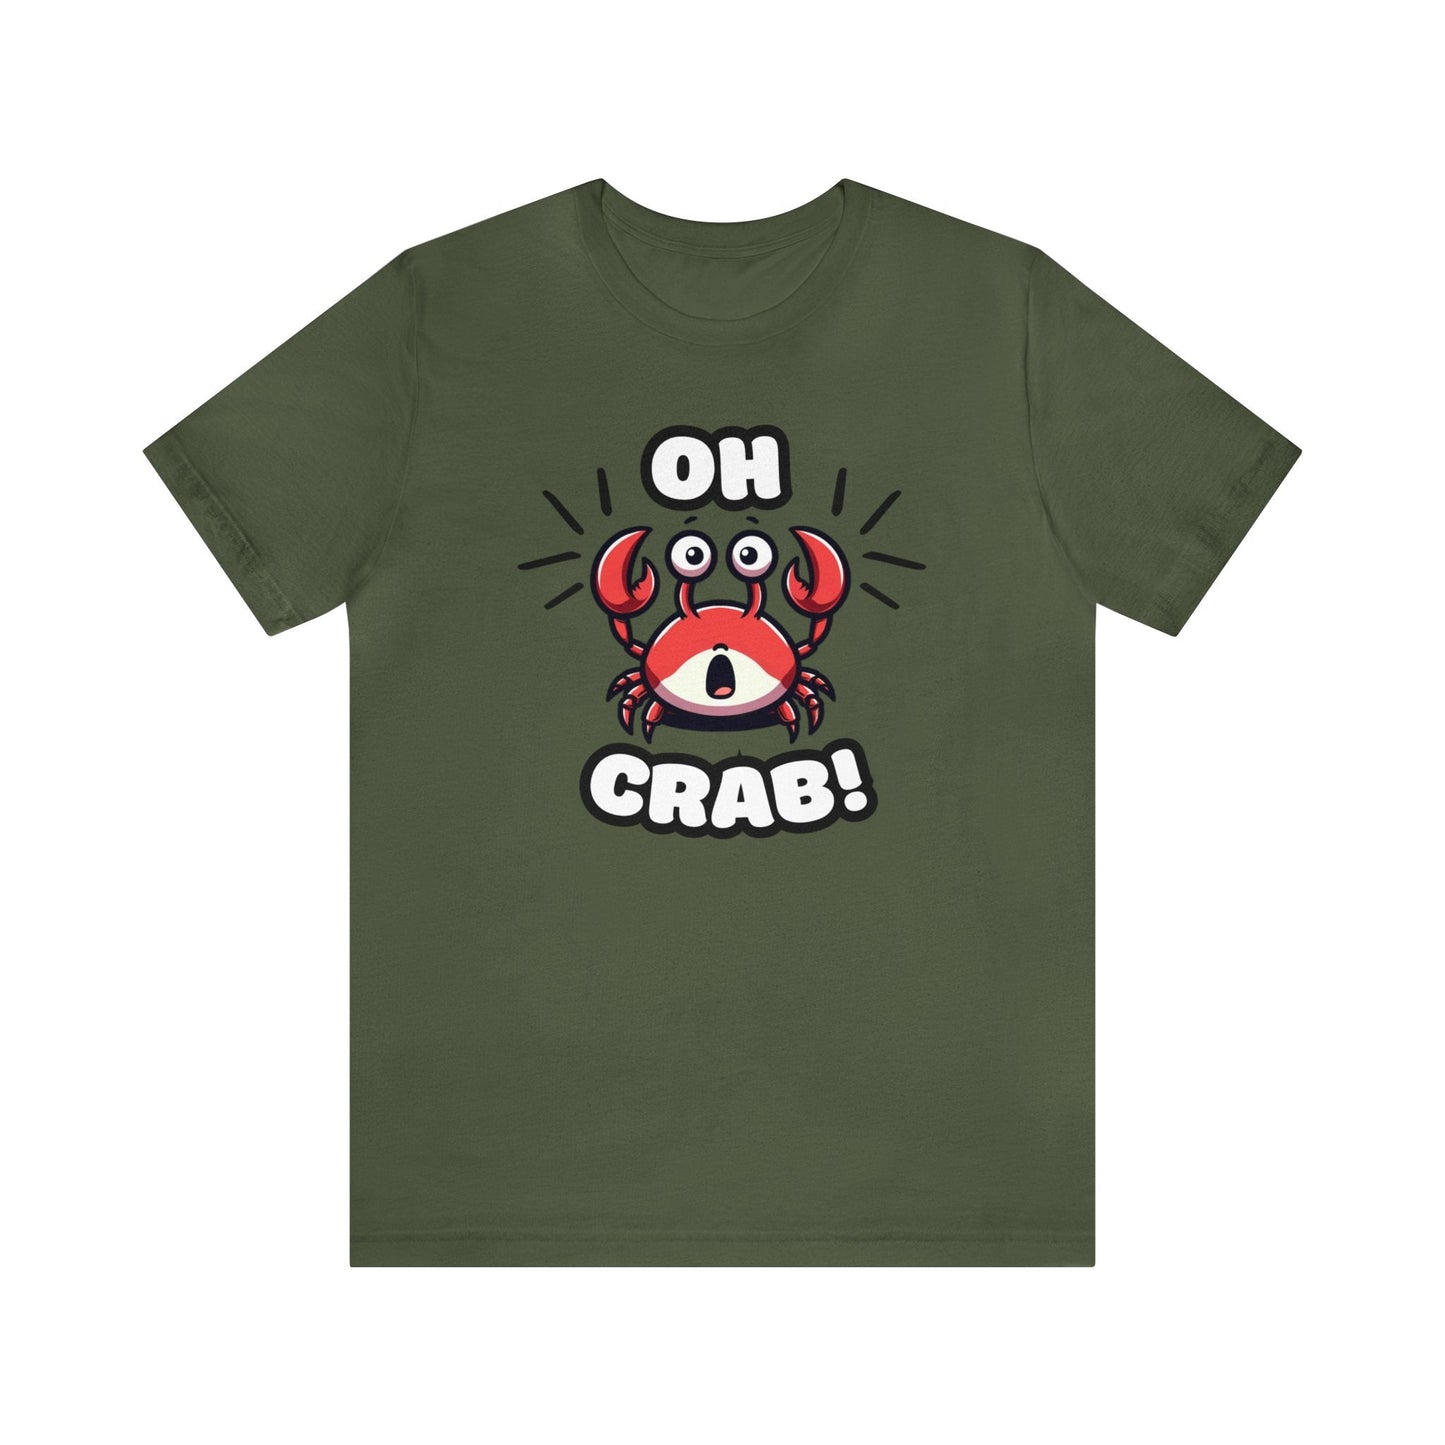 Oh Crab! - Crab T-shirt Military Green / S